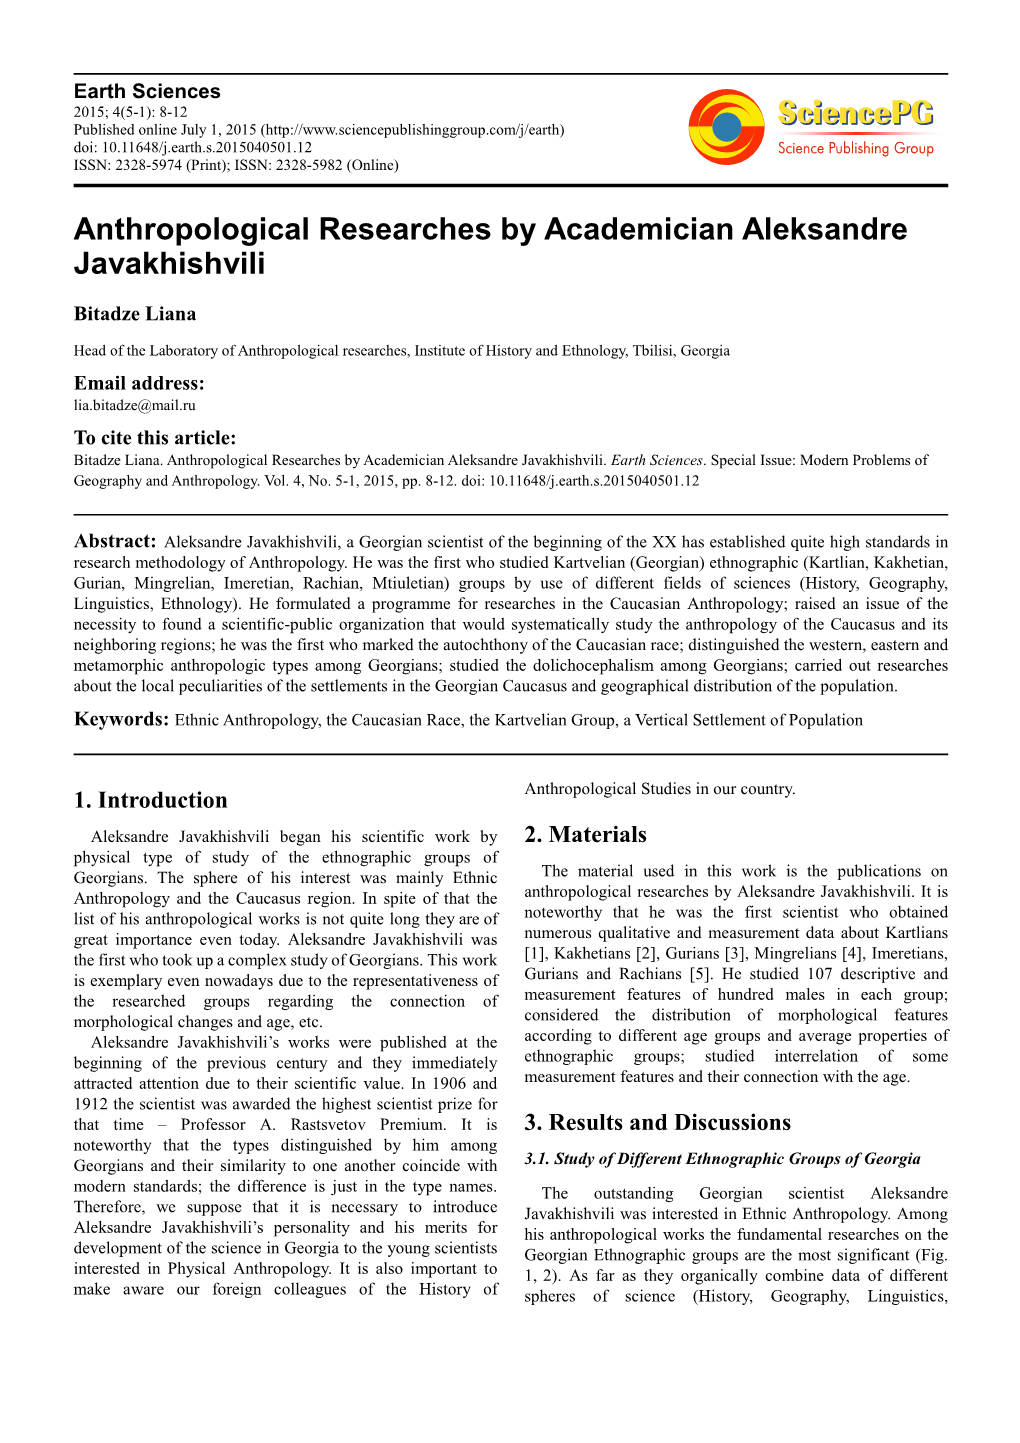 Anthropological Researches by Academician Aleksandre Javakhishvili